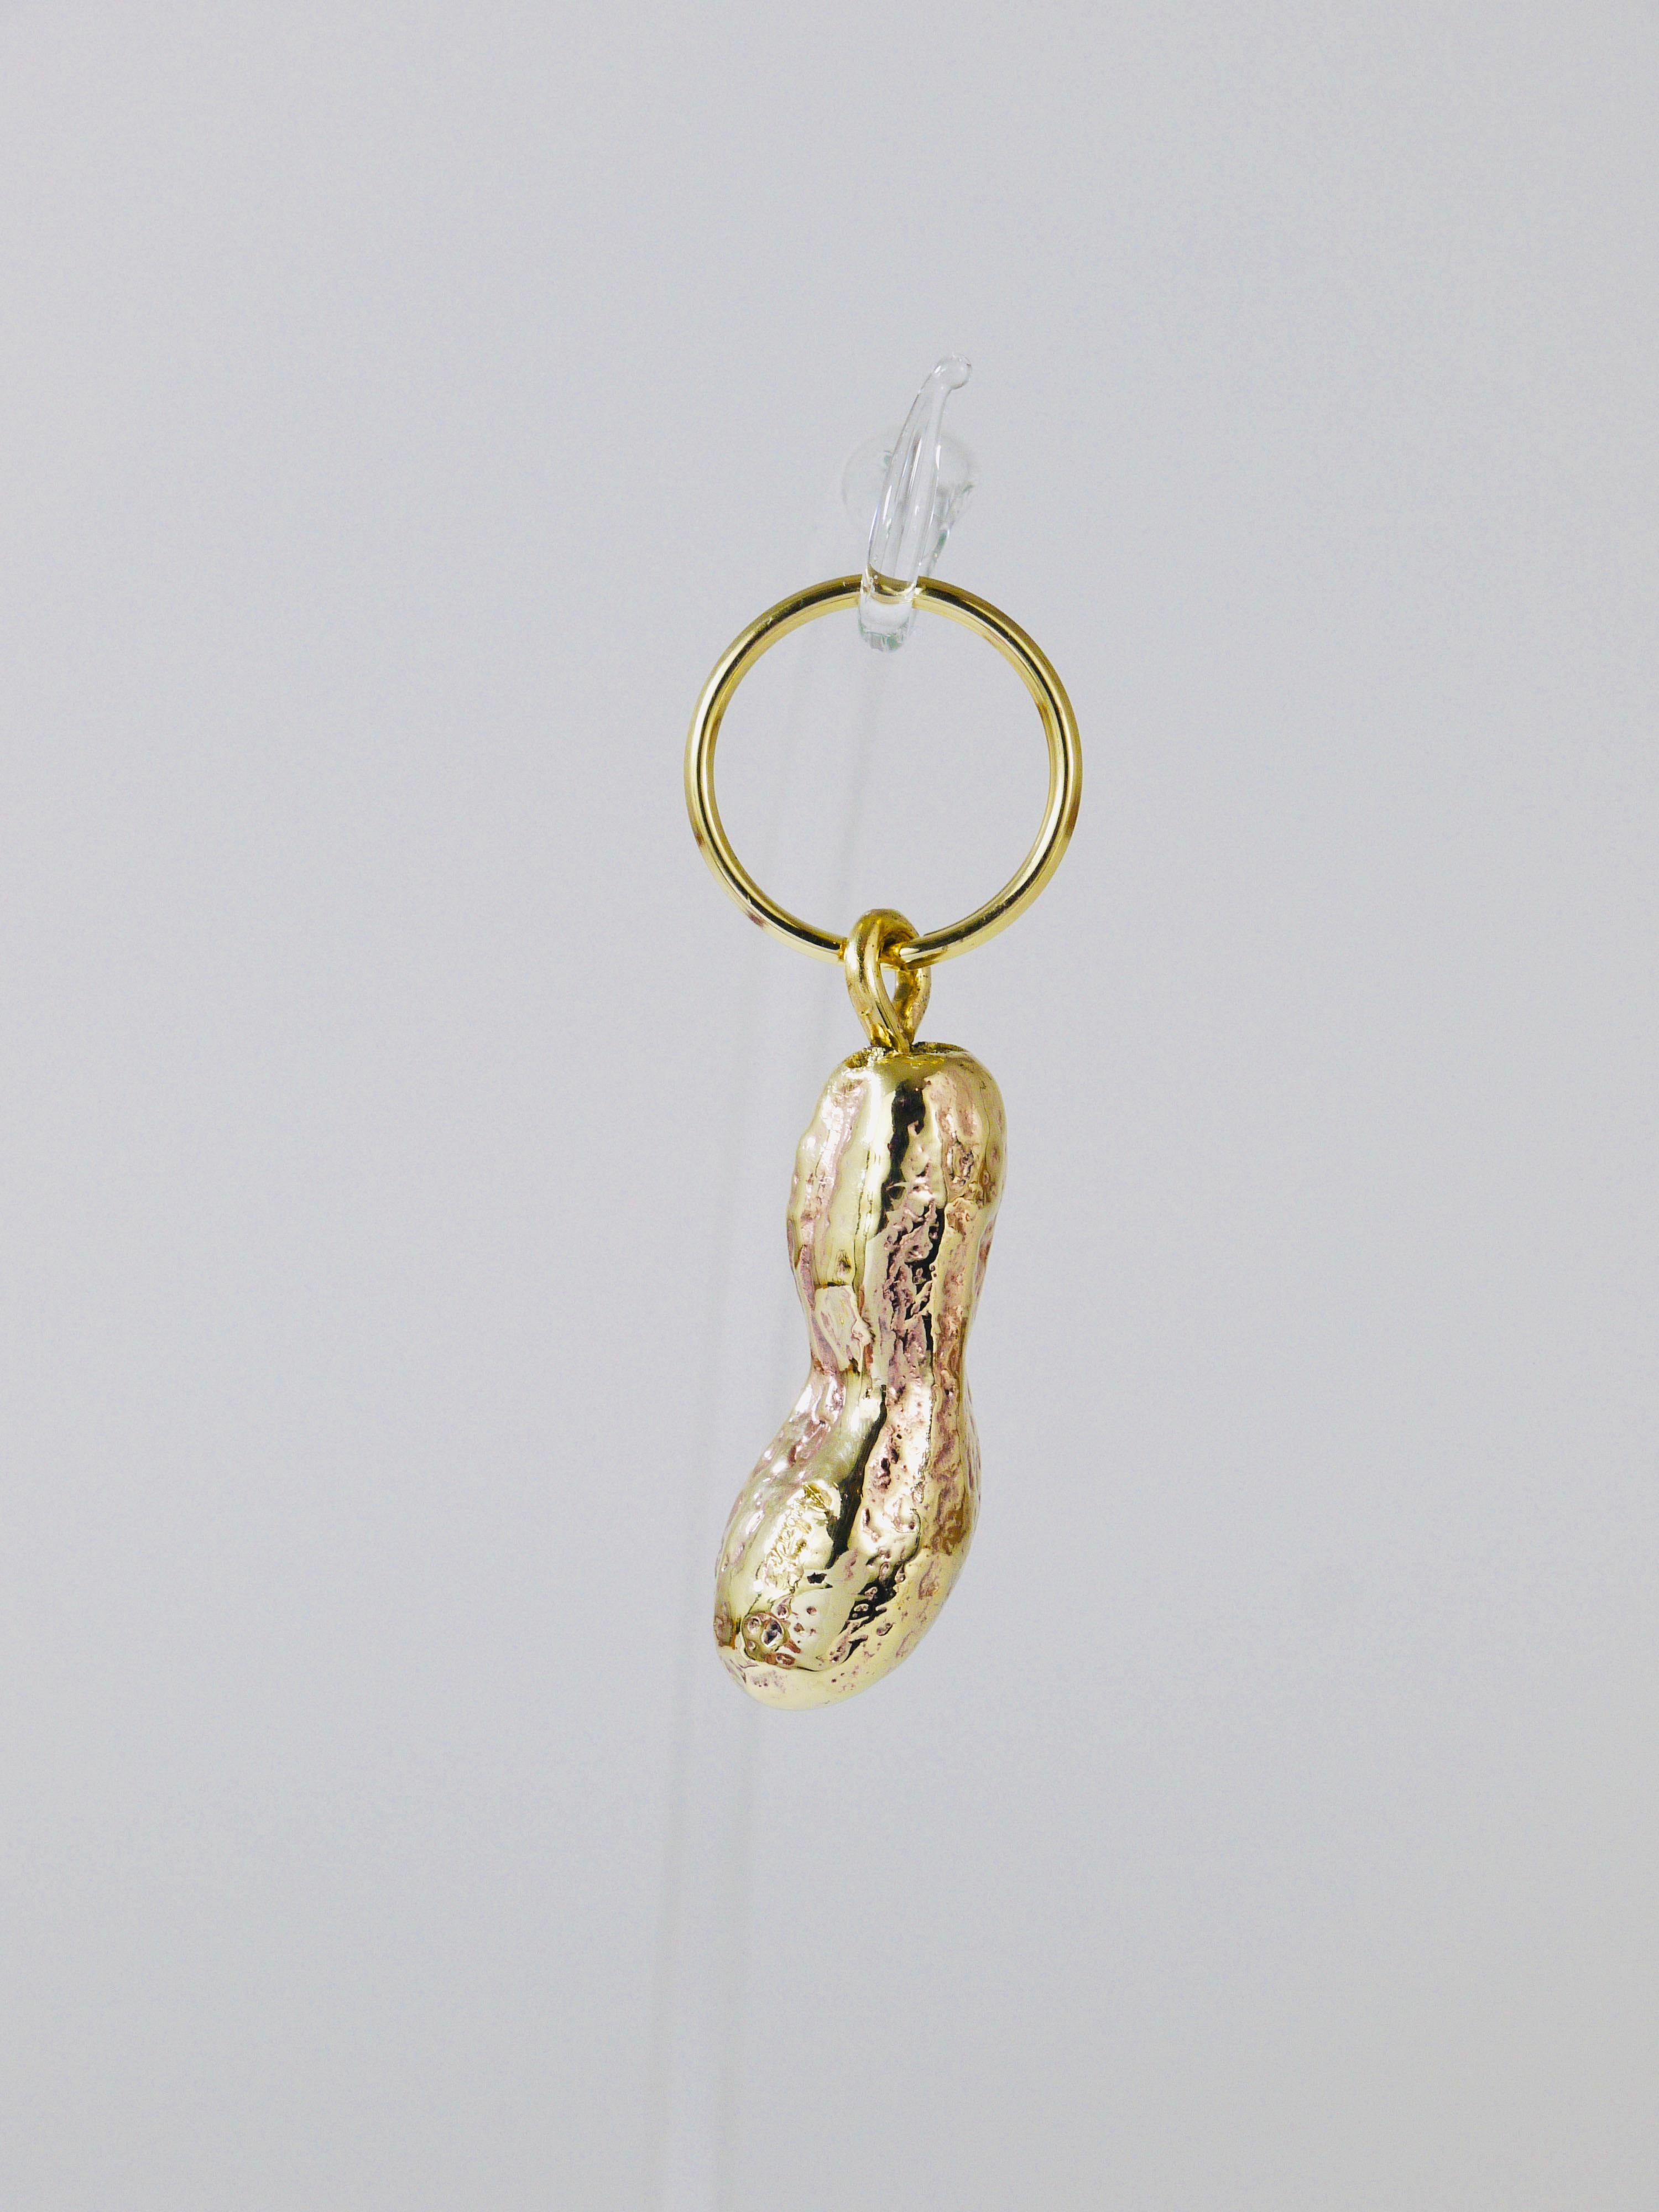 Austrian Carl Auböck Handcrafted Midcentury Peanut Brass Figurine Key Ring Chain Holder For Sale